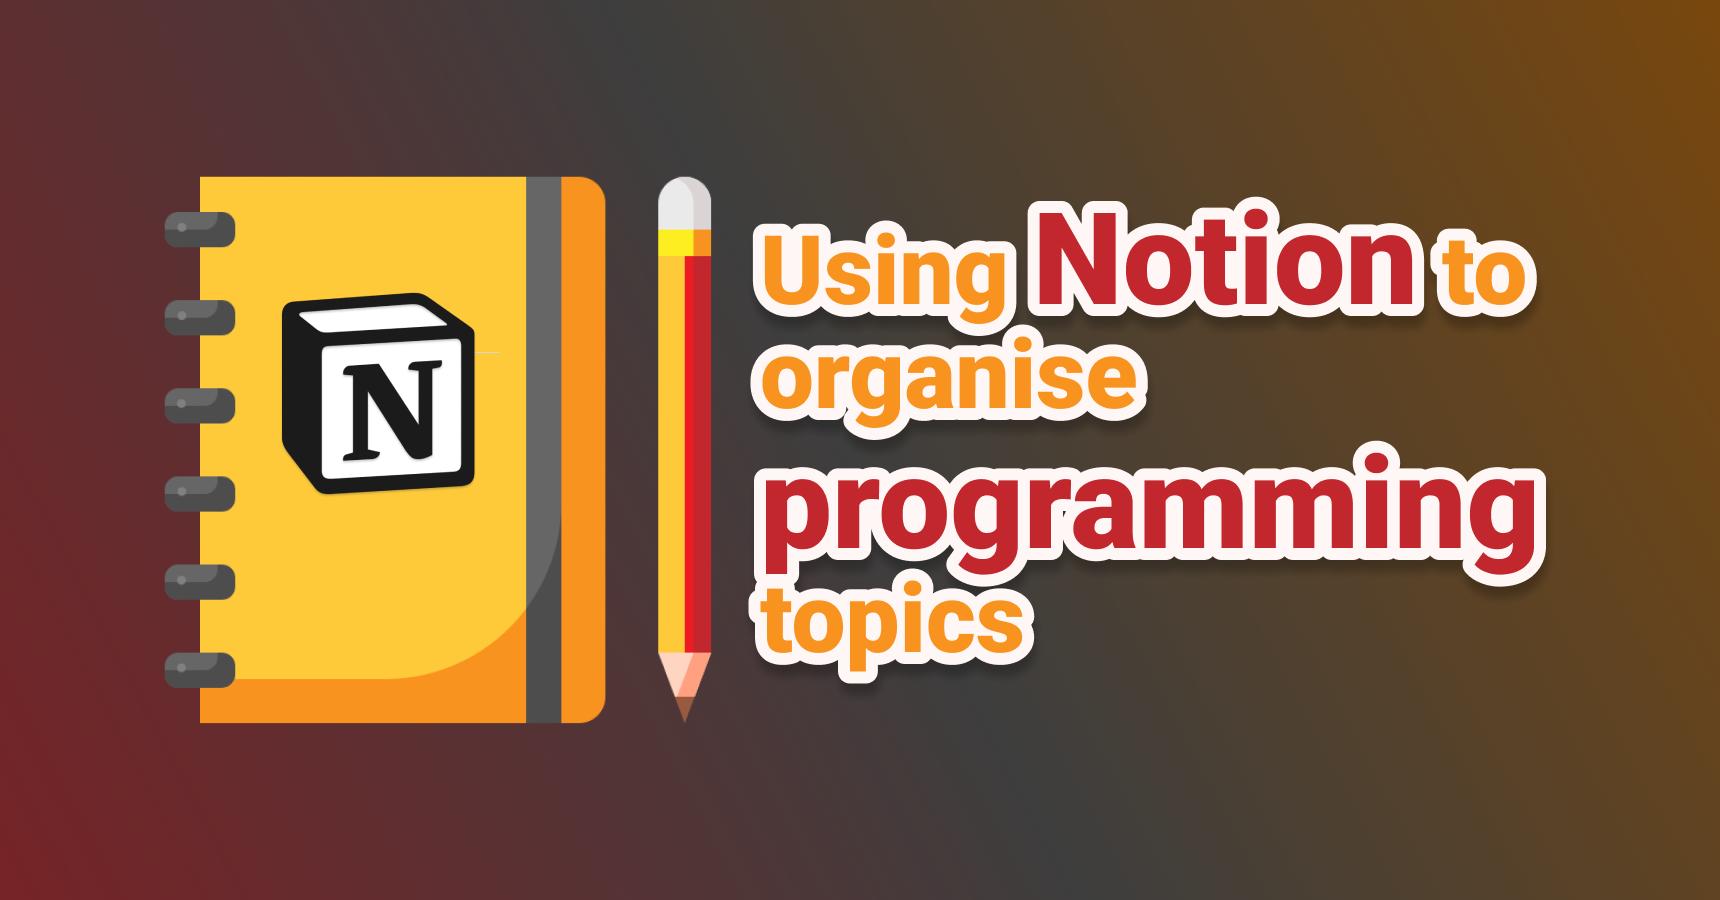 Using Notion to organise programming topics